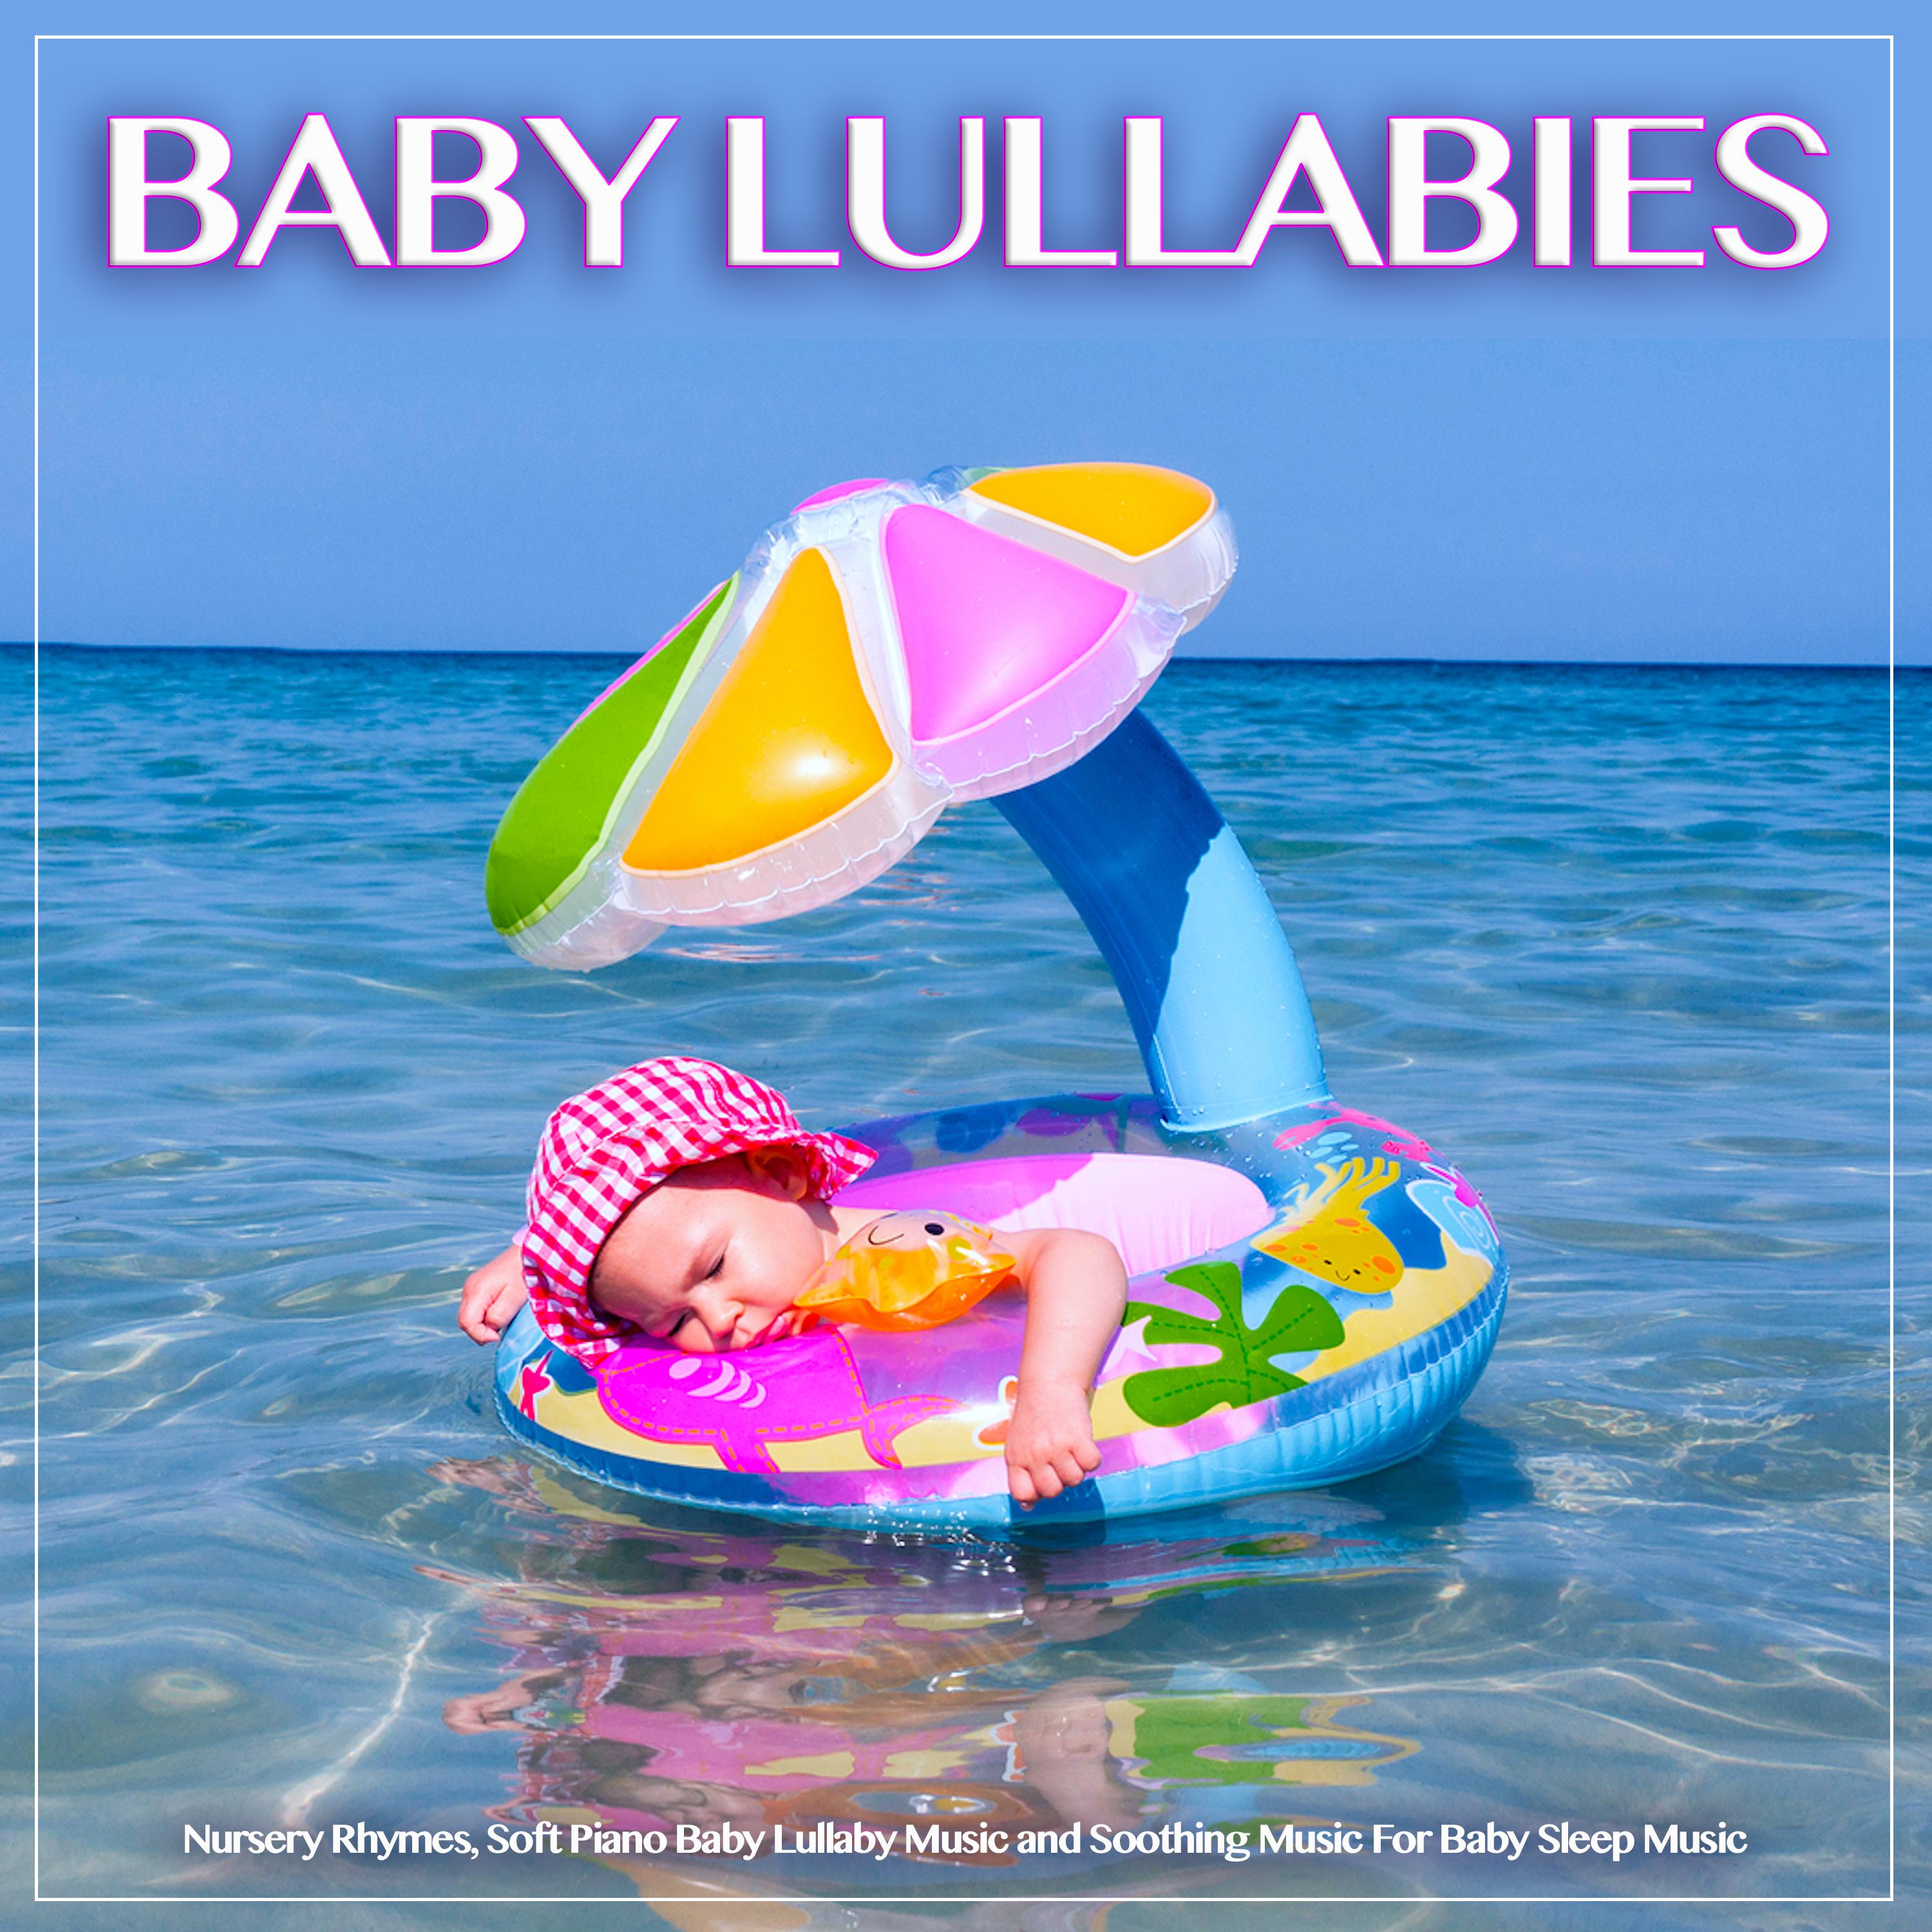 Hush Little Baby - Soft Piano - Baby Lullaby - Nursery Rhymes - Baby Lullabies - Baby Sleep Music